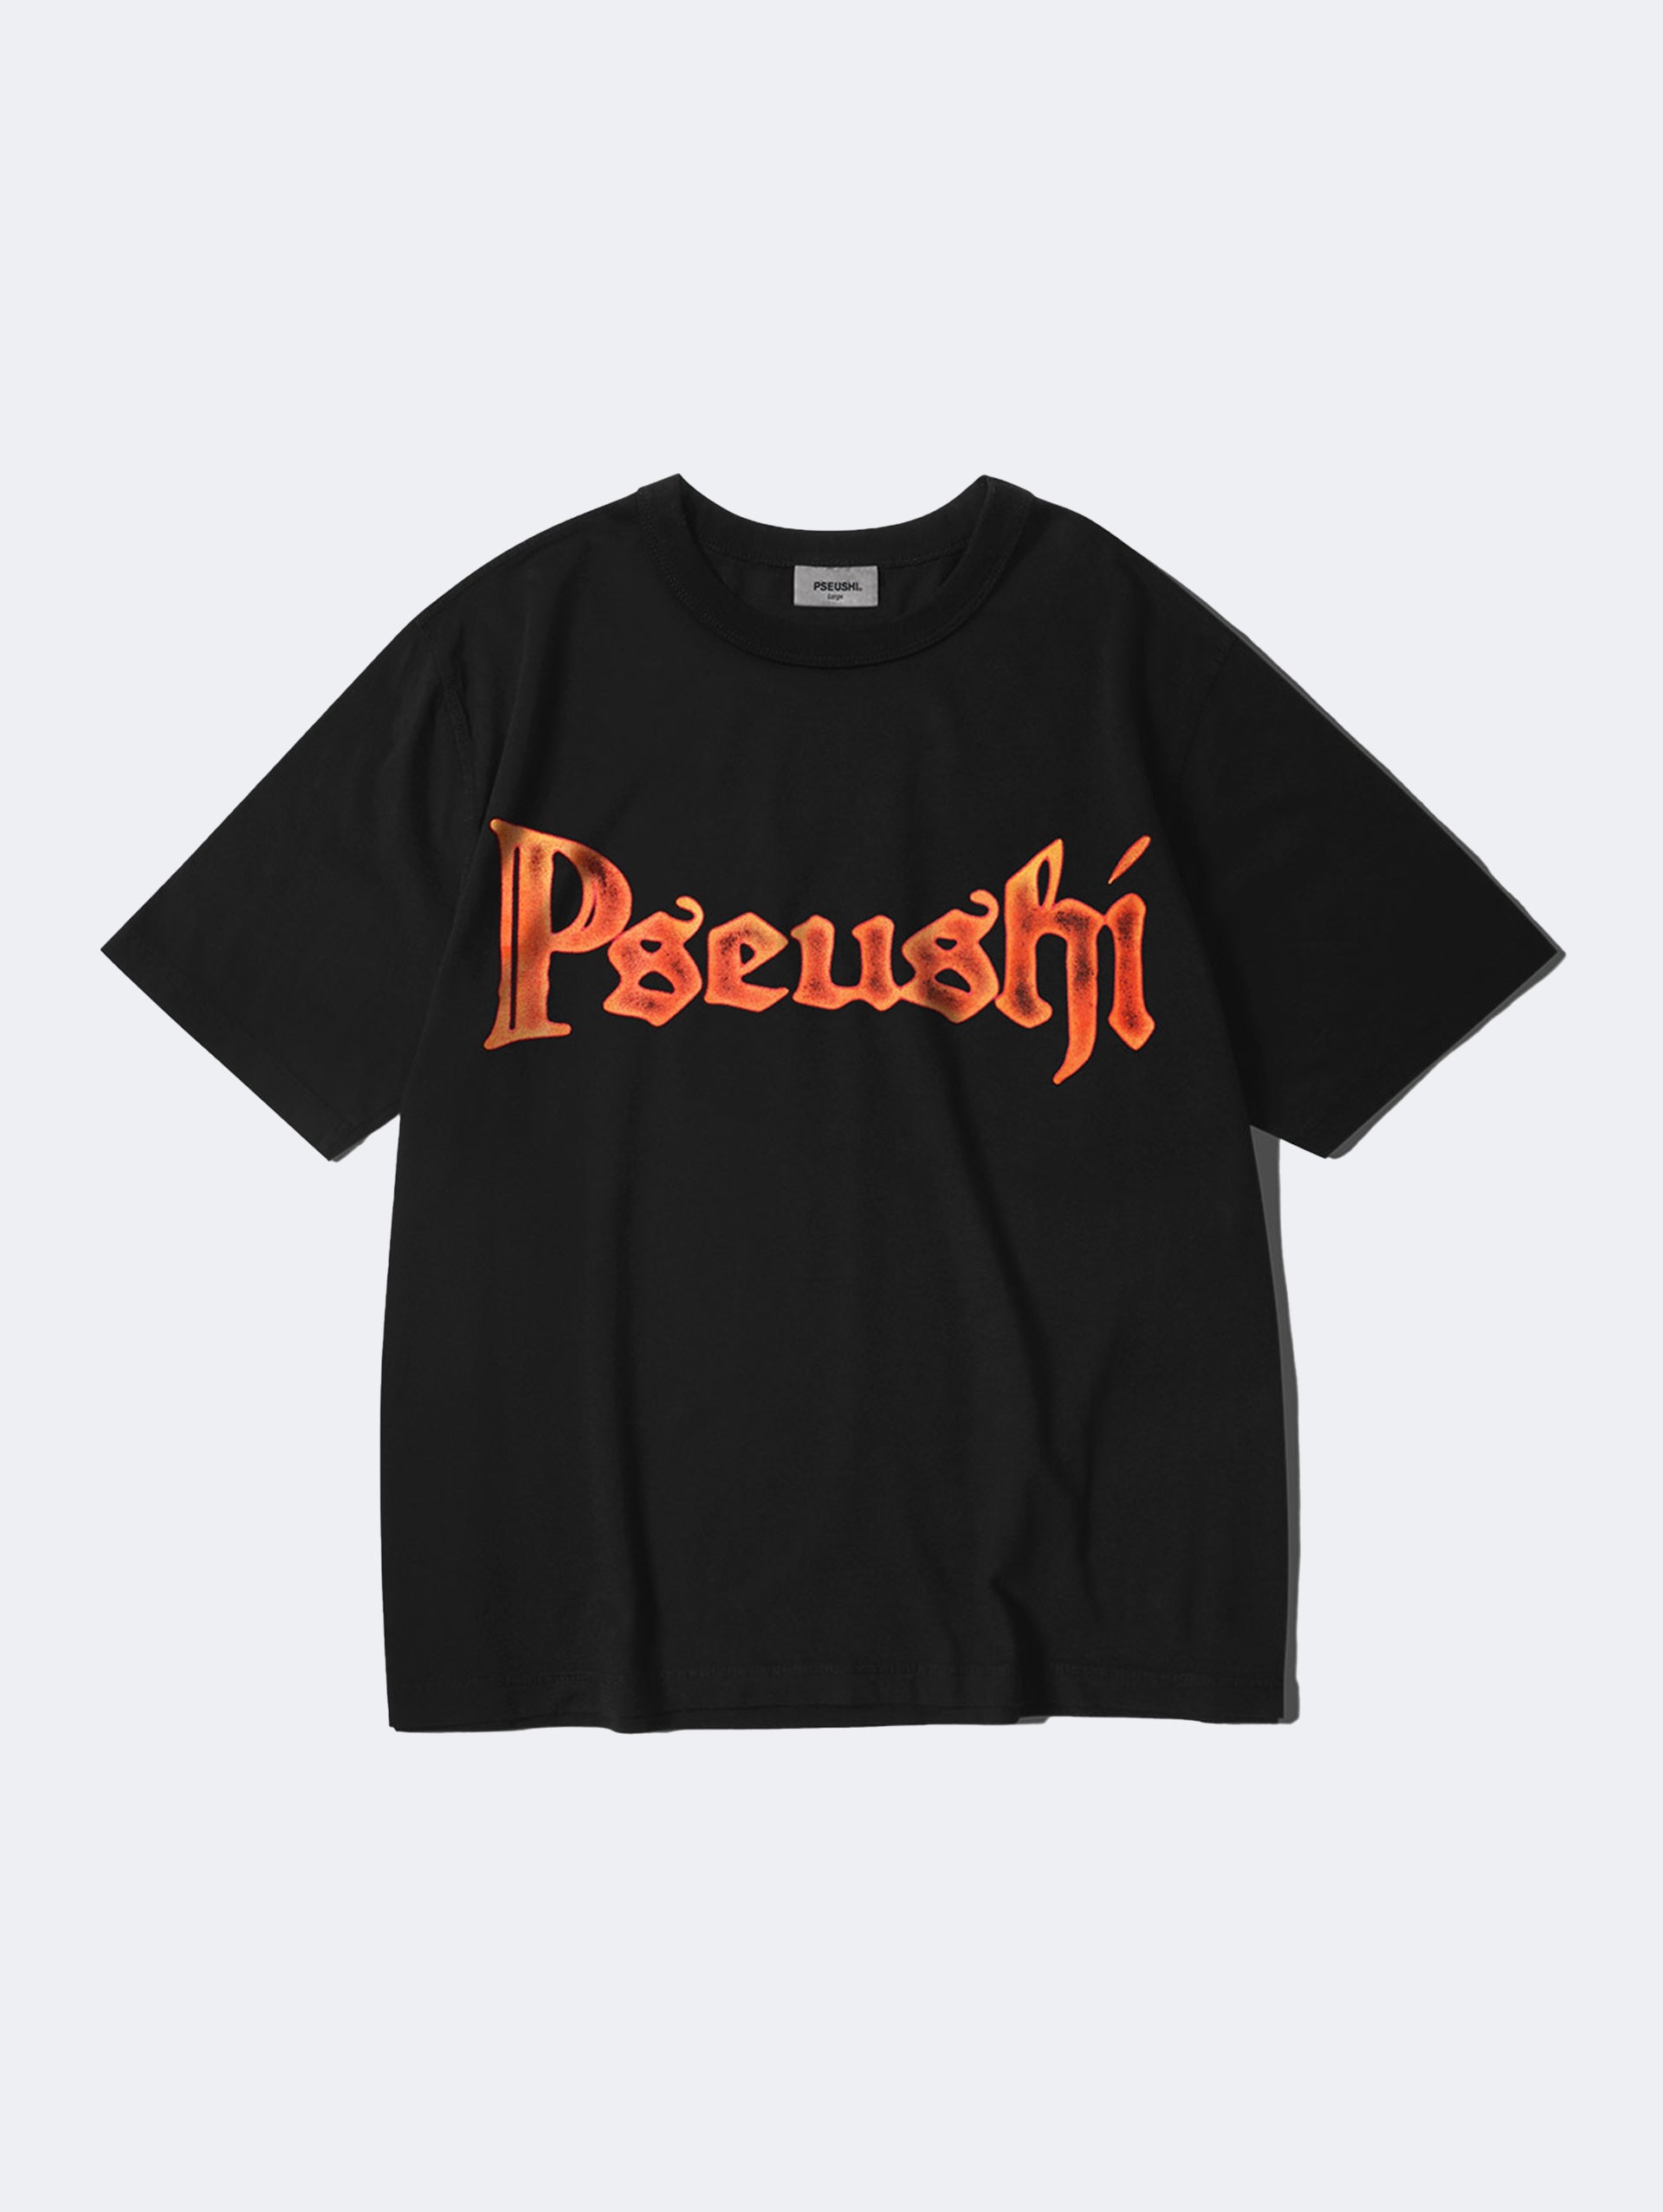 pseushi-blacksmiths-tee-black